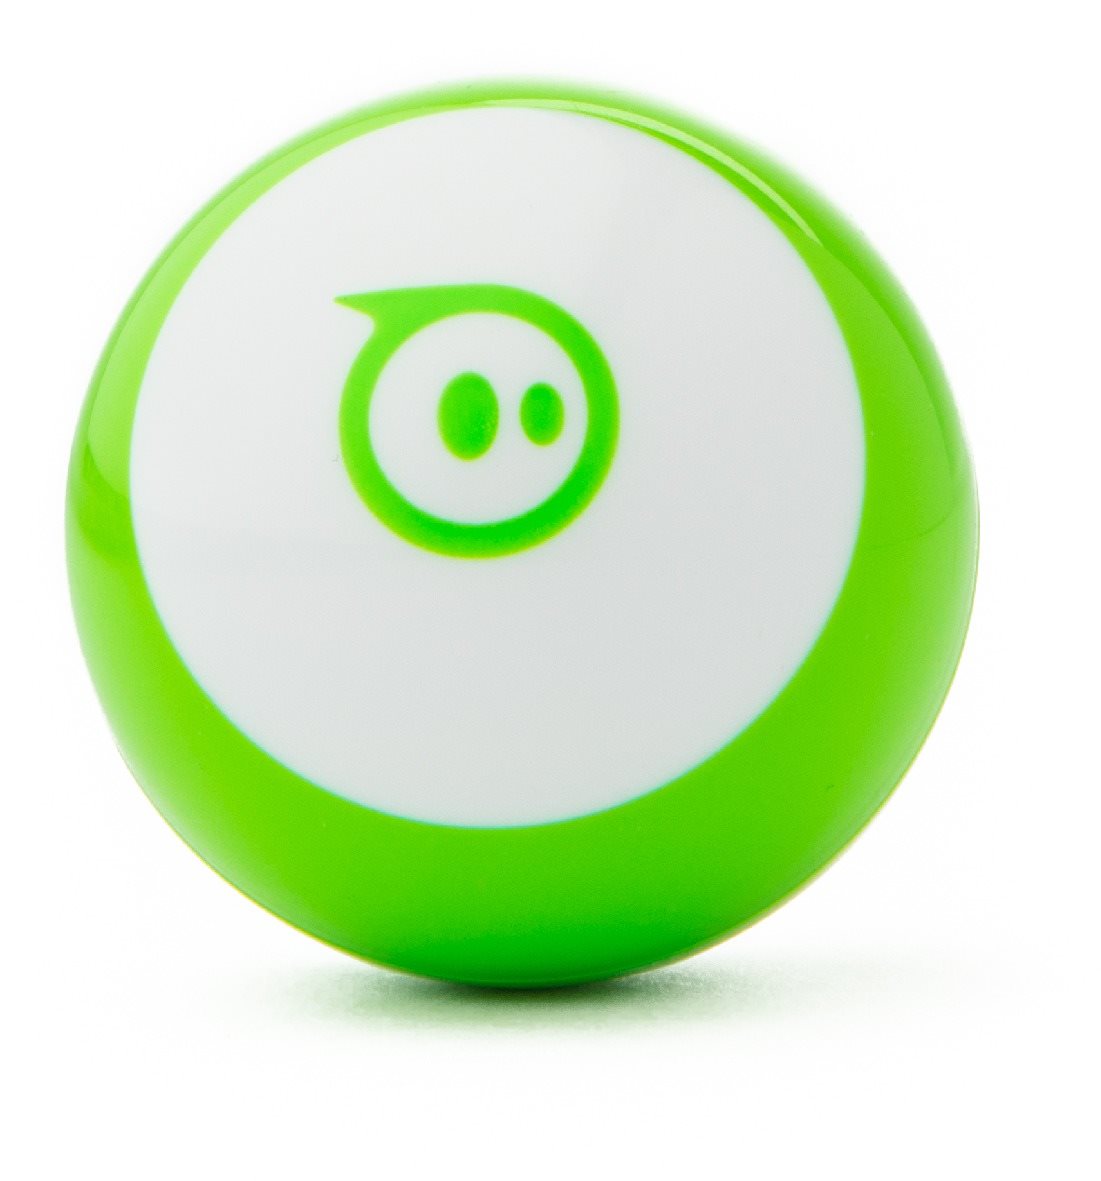 Sphero Mini Green